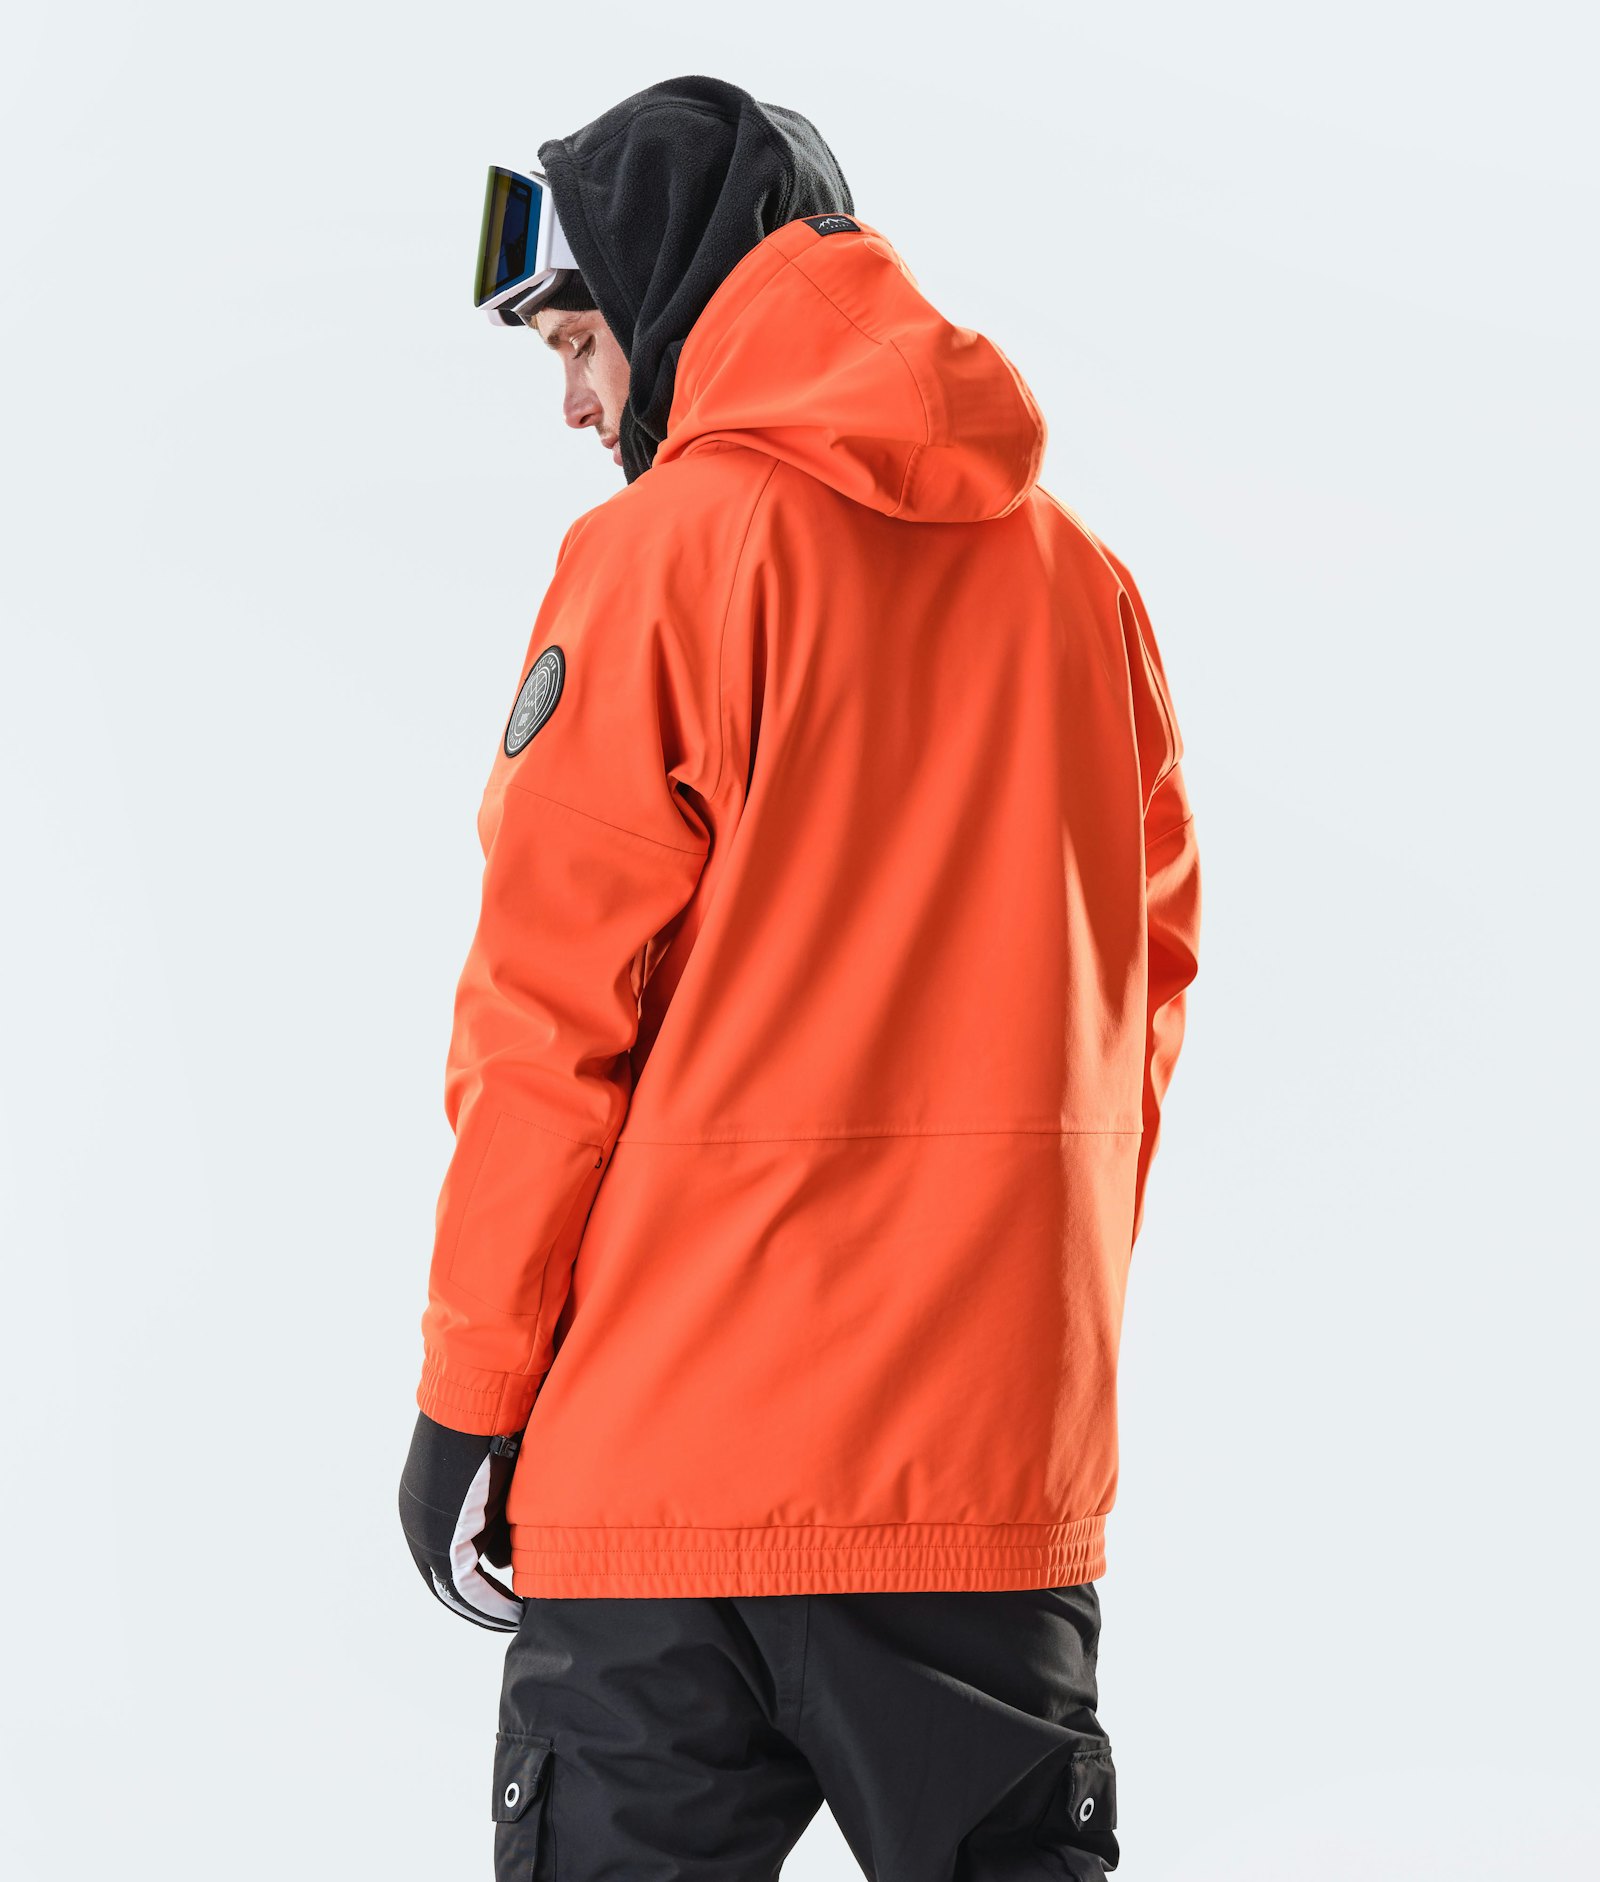 Dope Rogue Ski jas Heren Orange